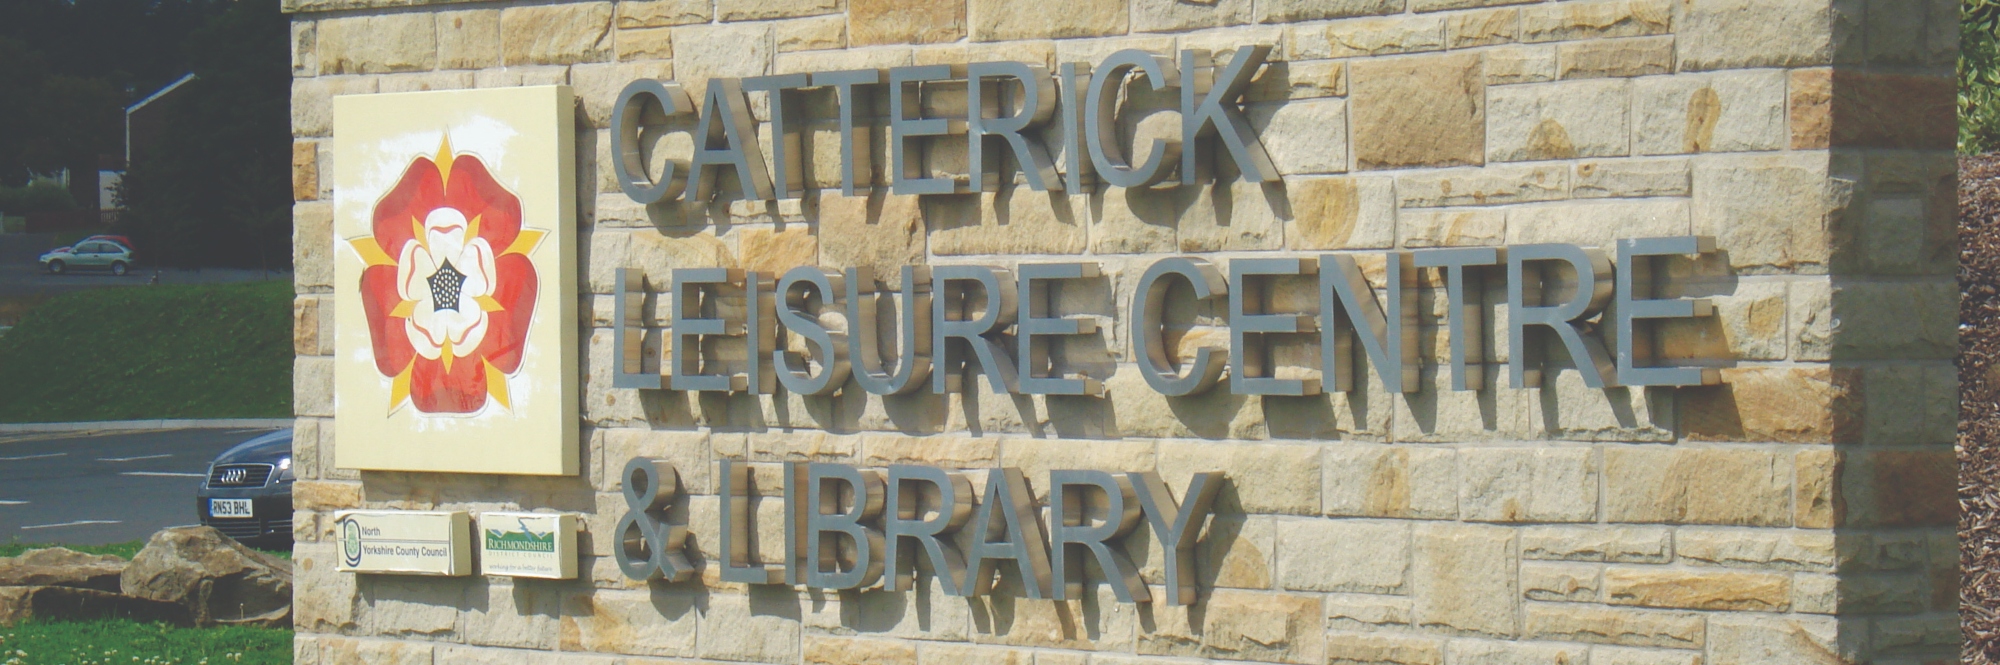 Catterick Leisure Centre